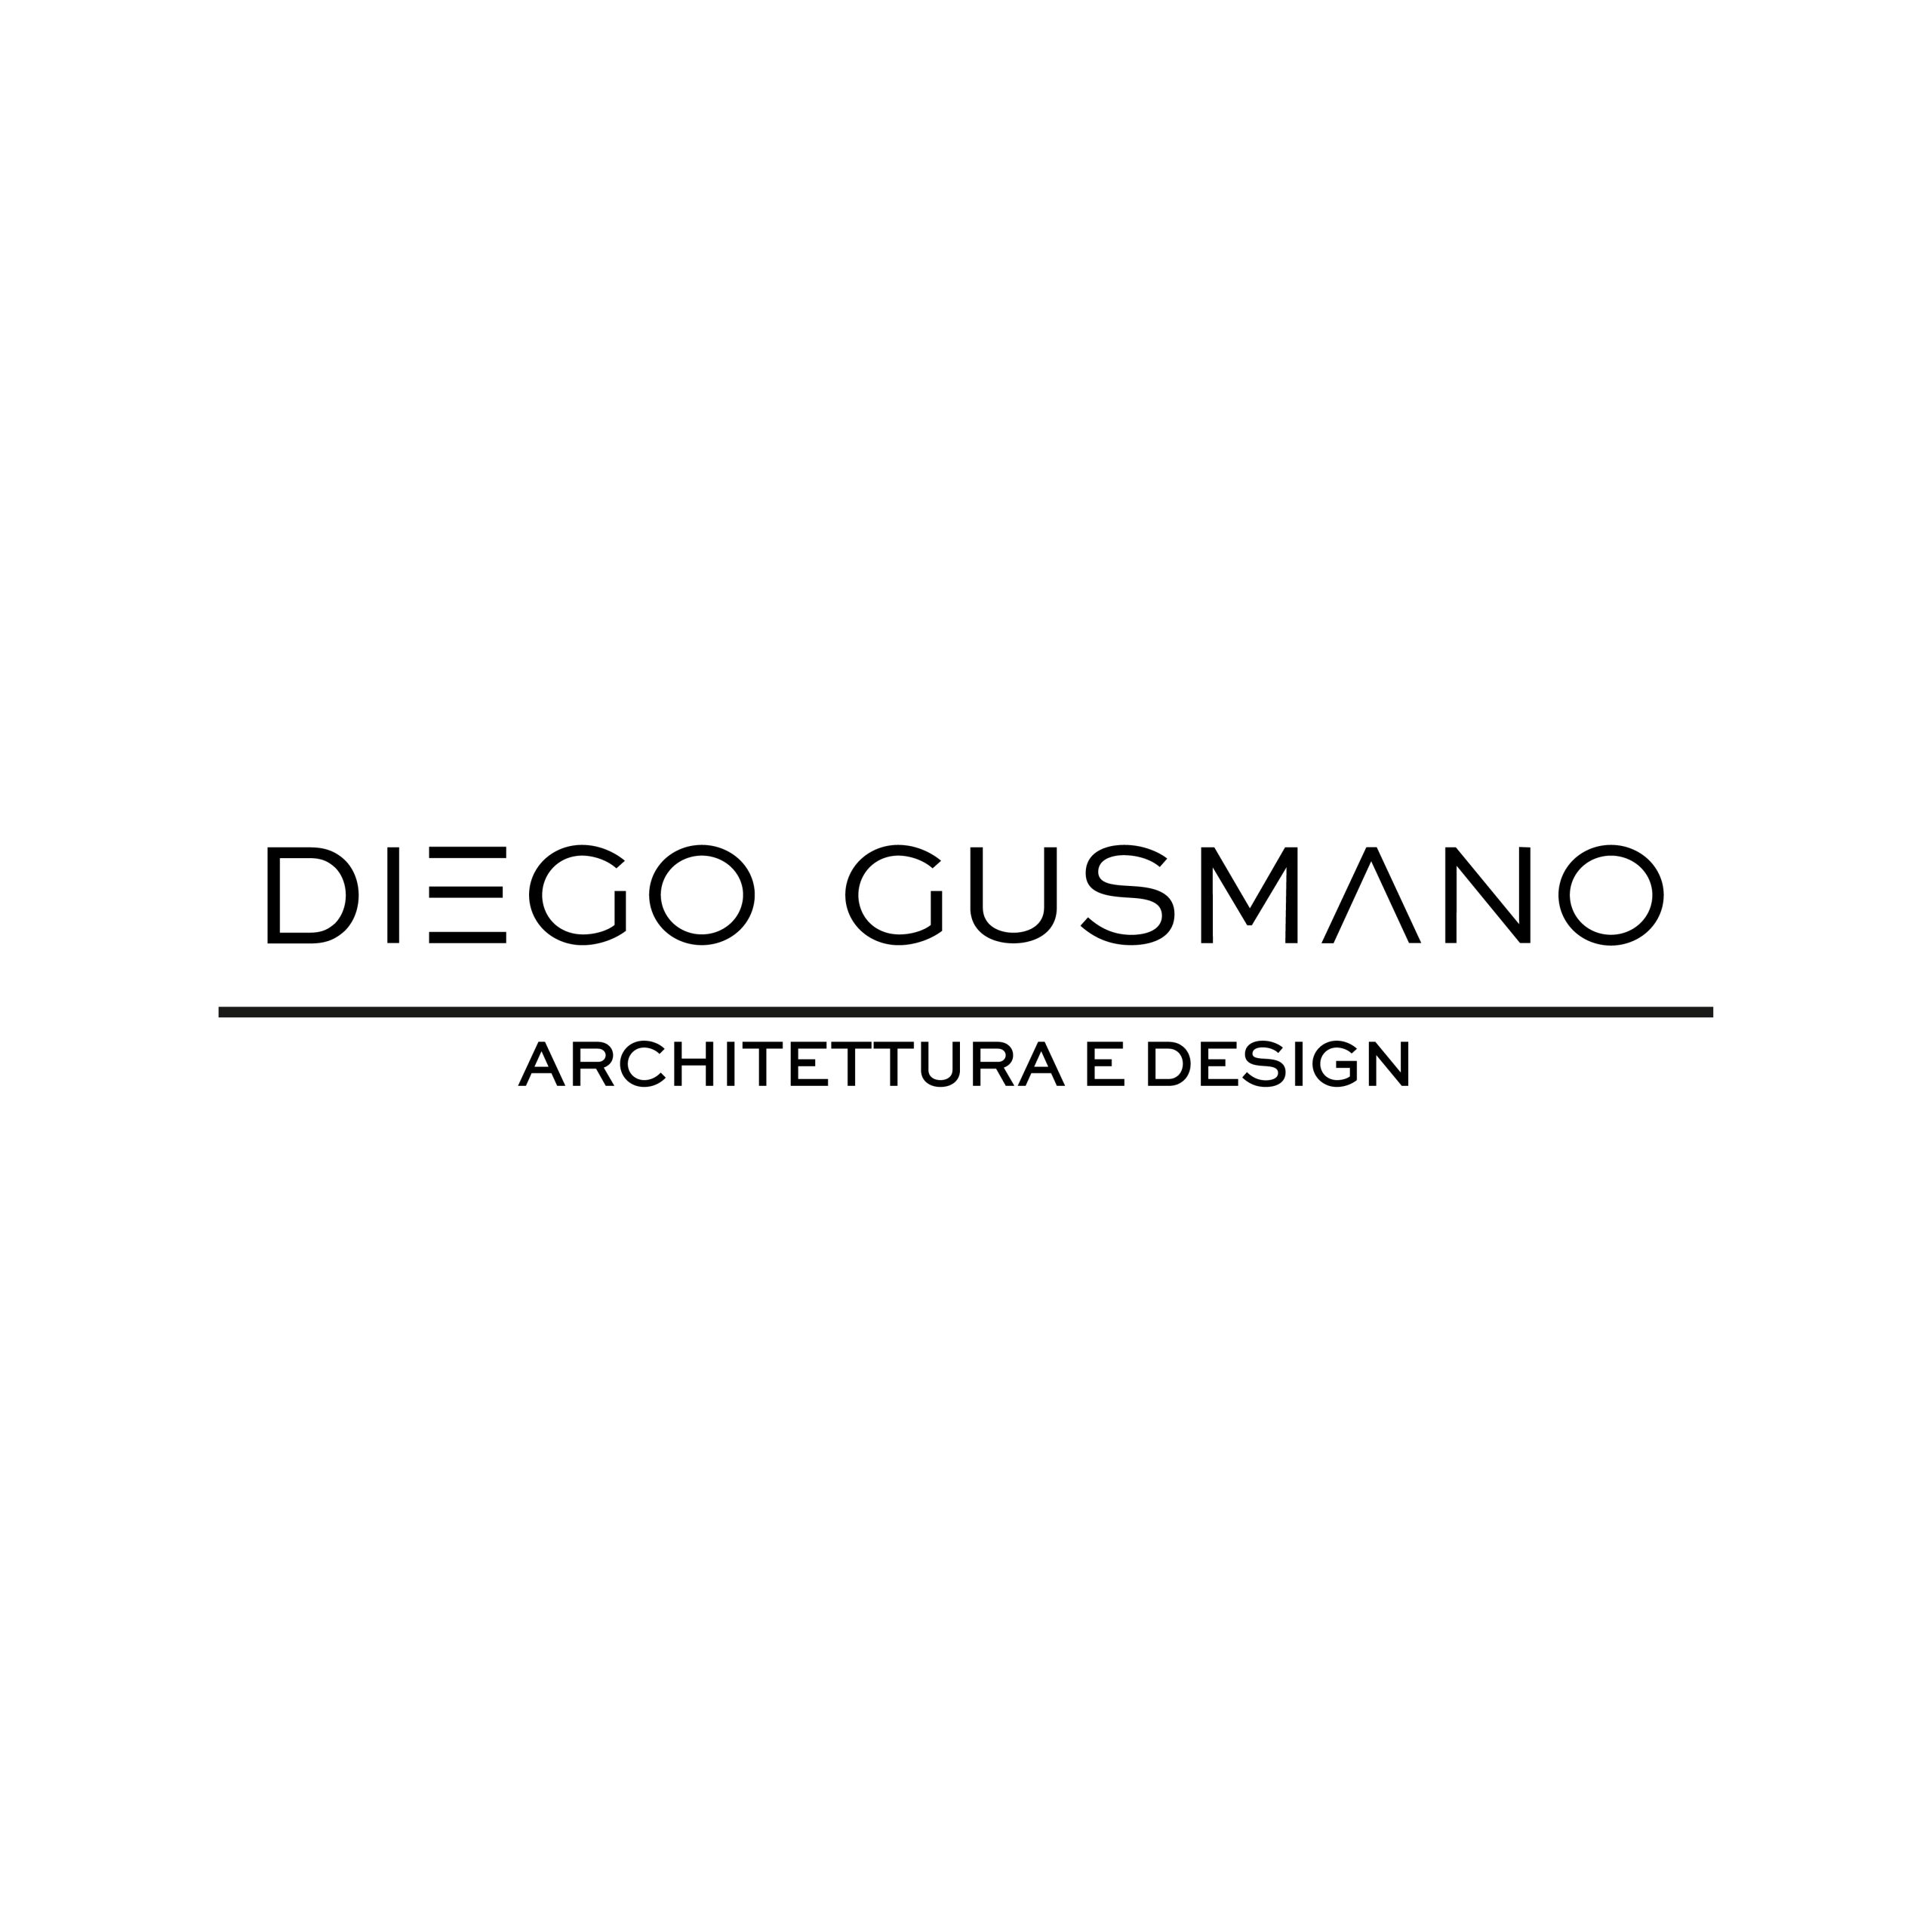 Diego Gusmano